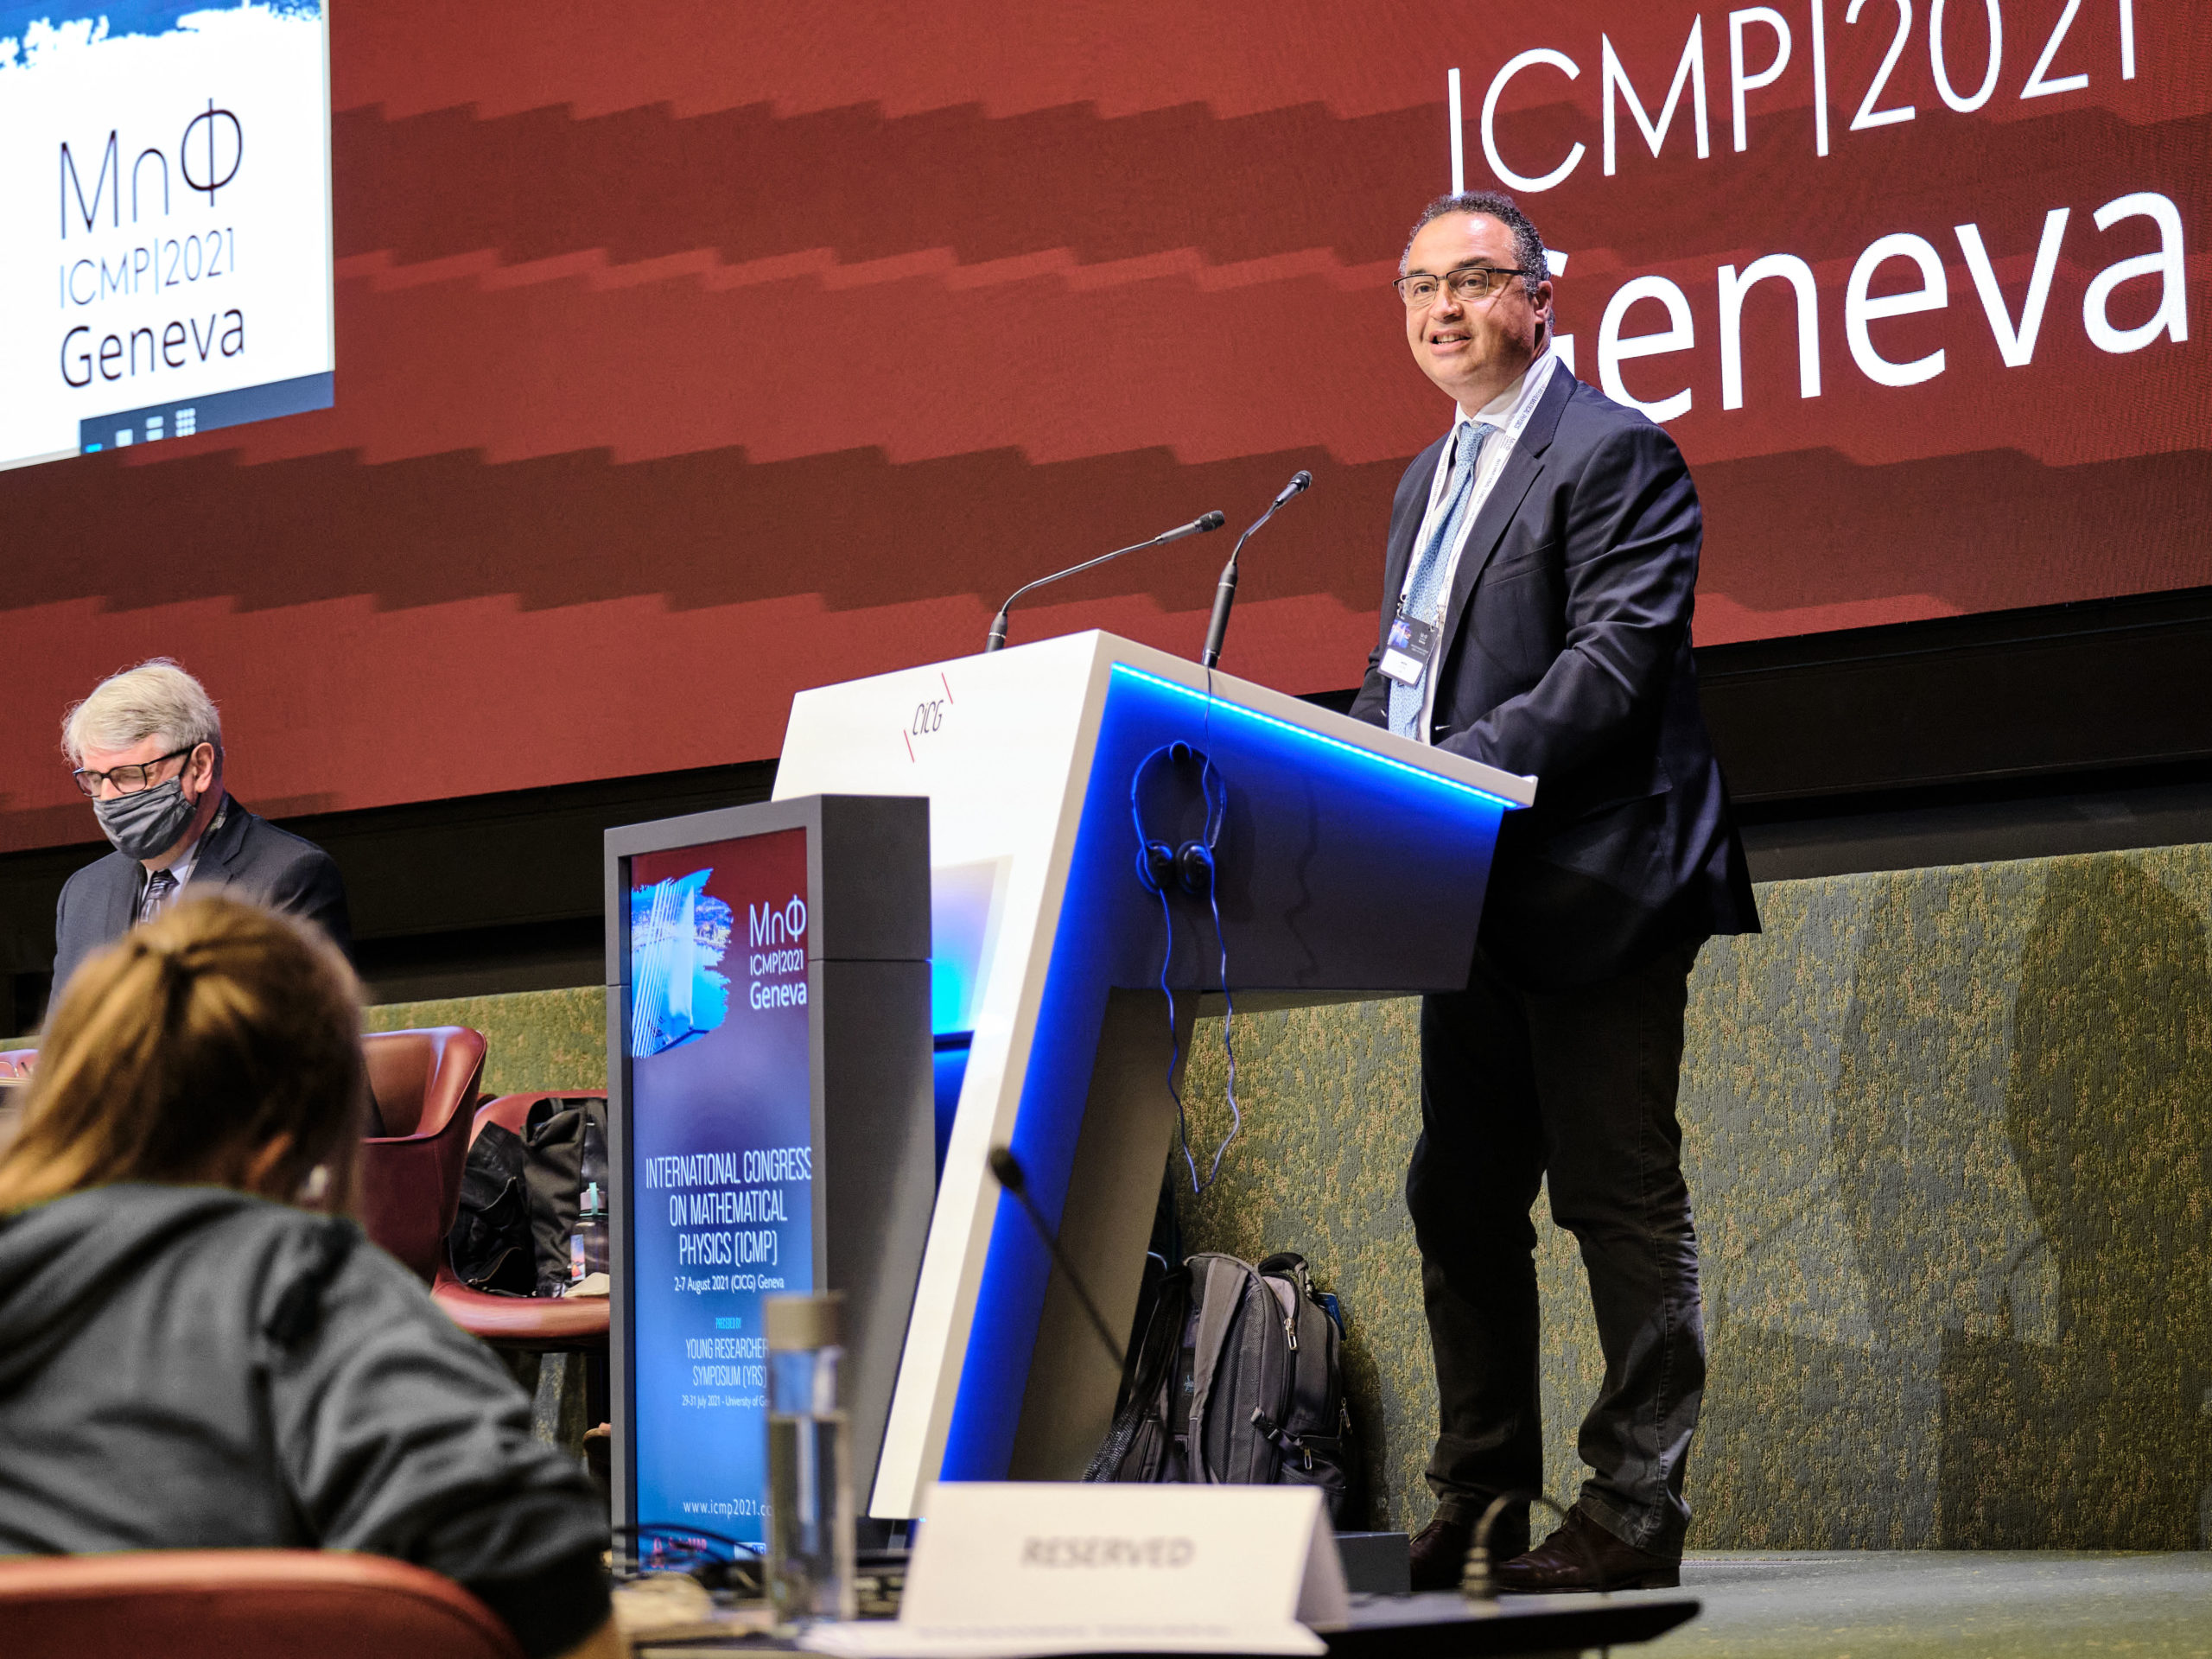 ICMP 2021 Videos & Photographs